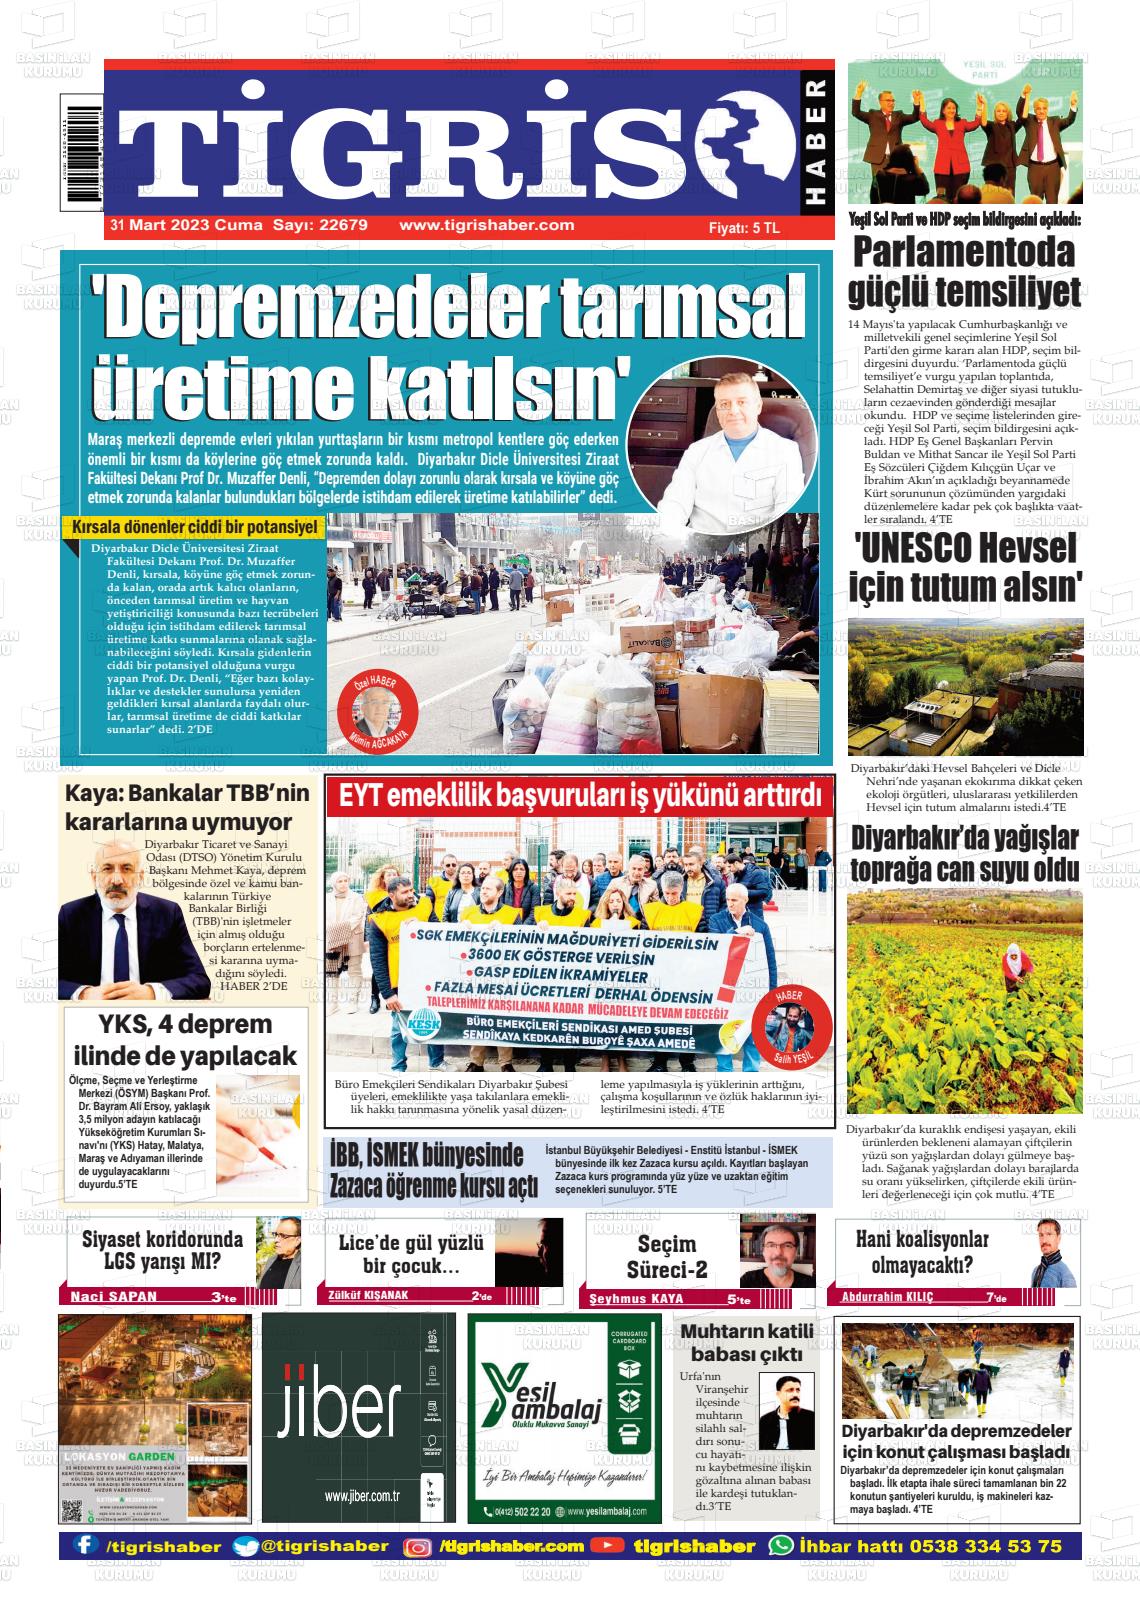 31 Mart 2023 Tigris Haber Gazete Manşeti